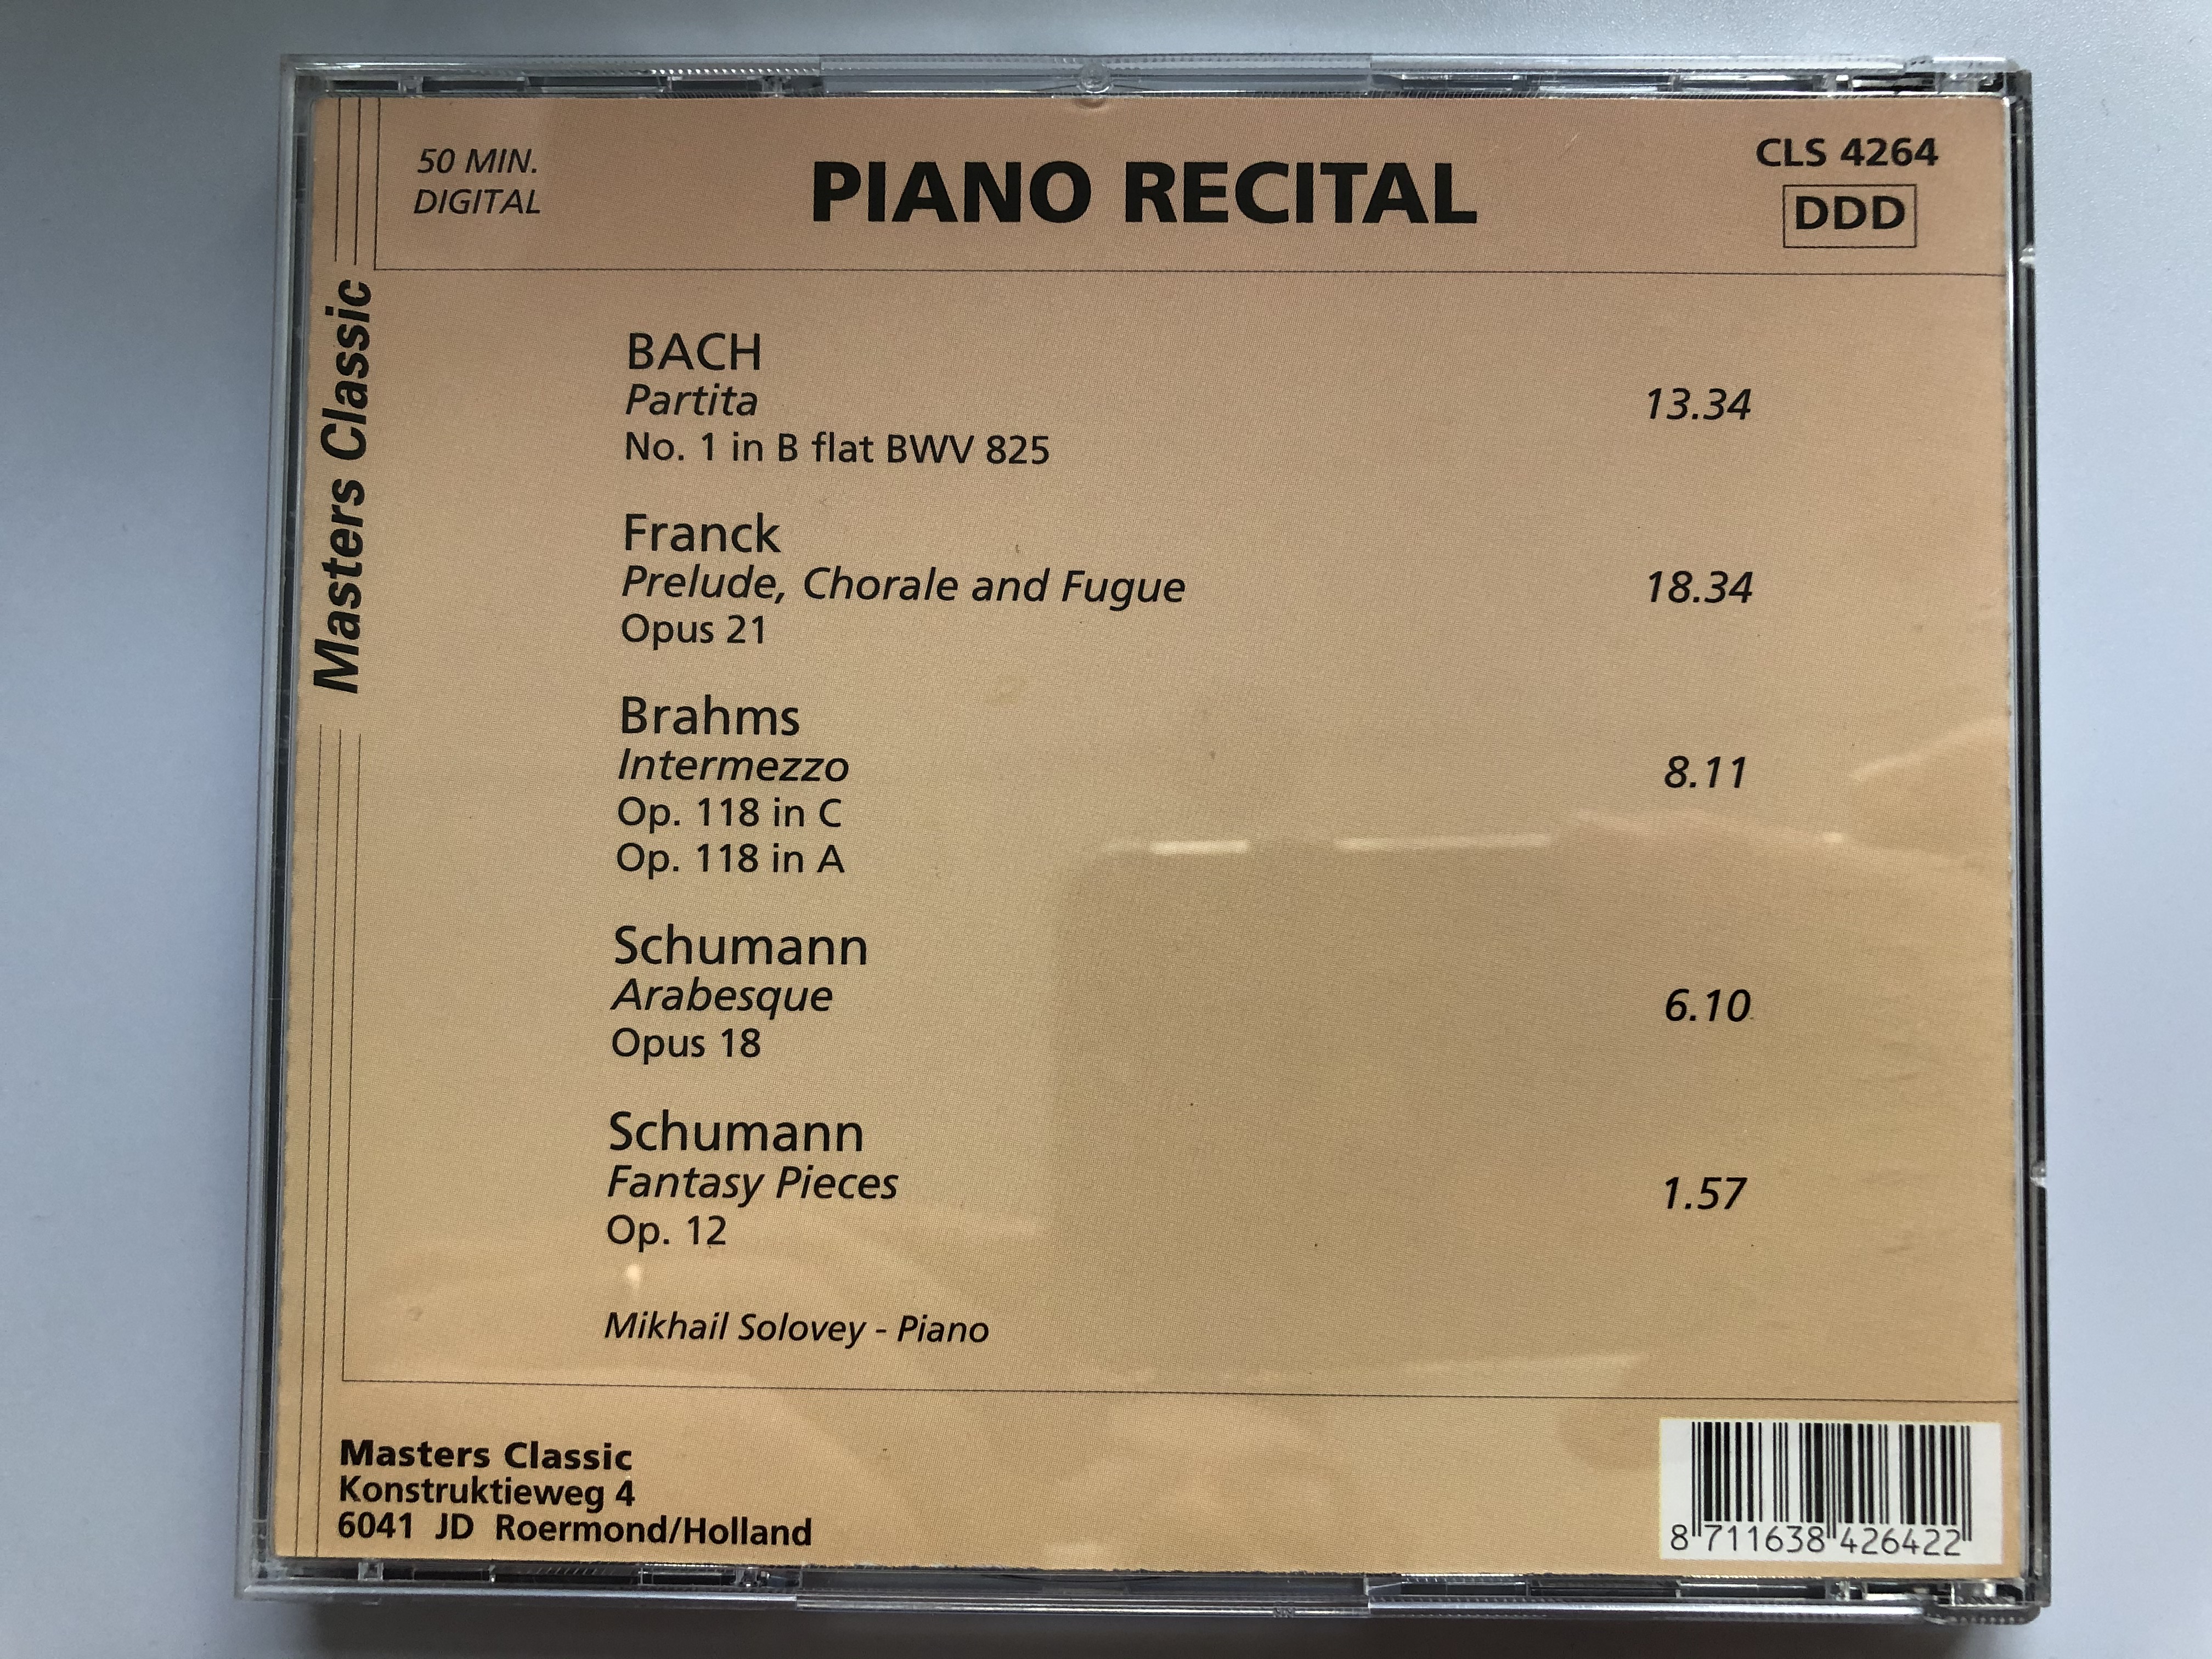 piano-recital-bach-franck-brahms-schumann-mikhail-solovey-piano-masters-classic-audio-cd-cls-4264-3-.jpg